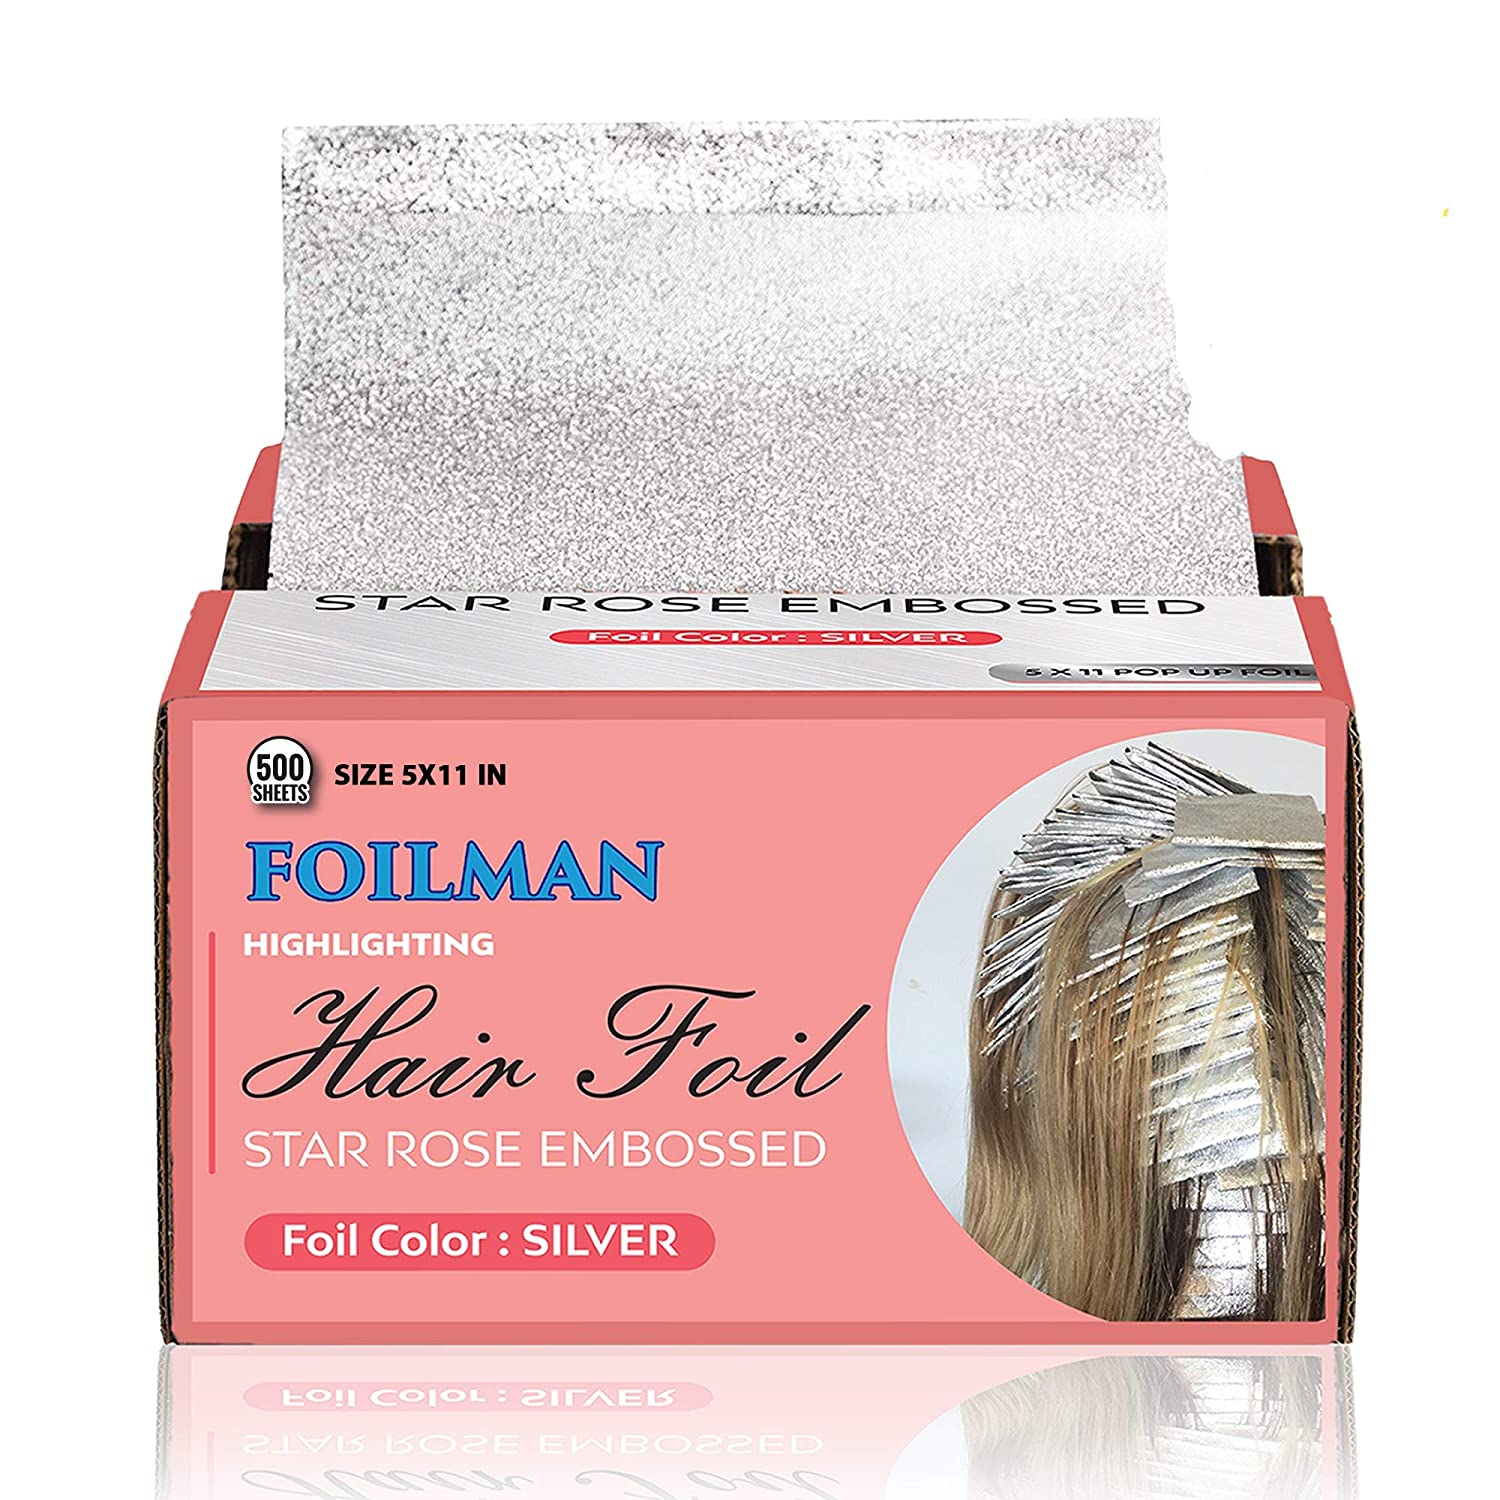 FASTFOILS 5 x 12 Inches Pre Cut Foils - Lightweight Hair Foils for  Highlighting - 75 Sheets